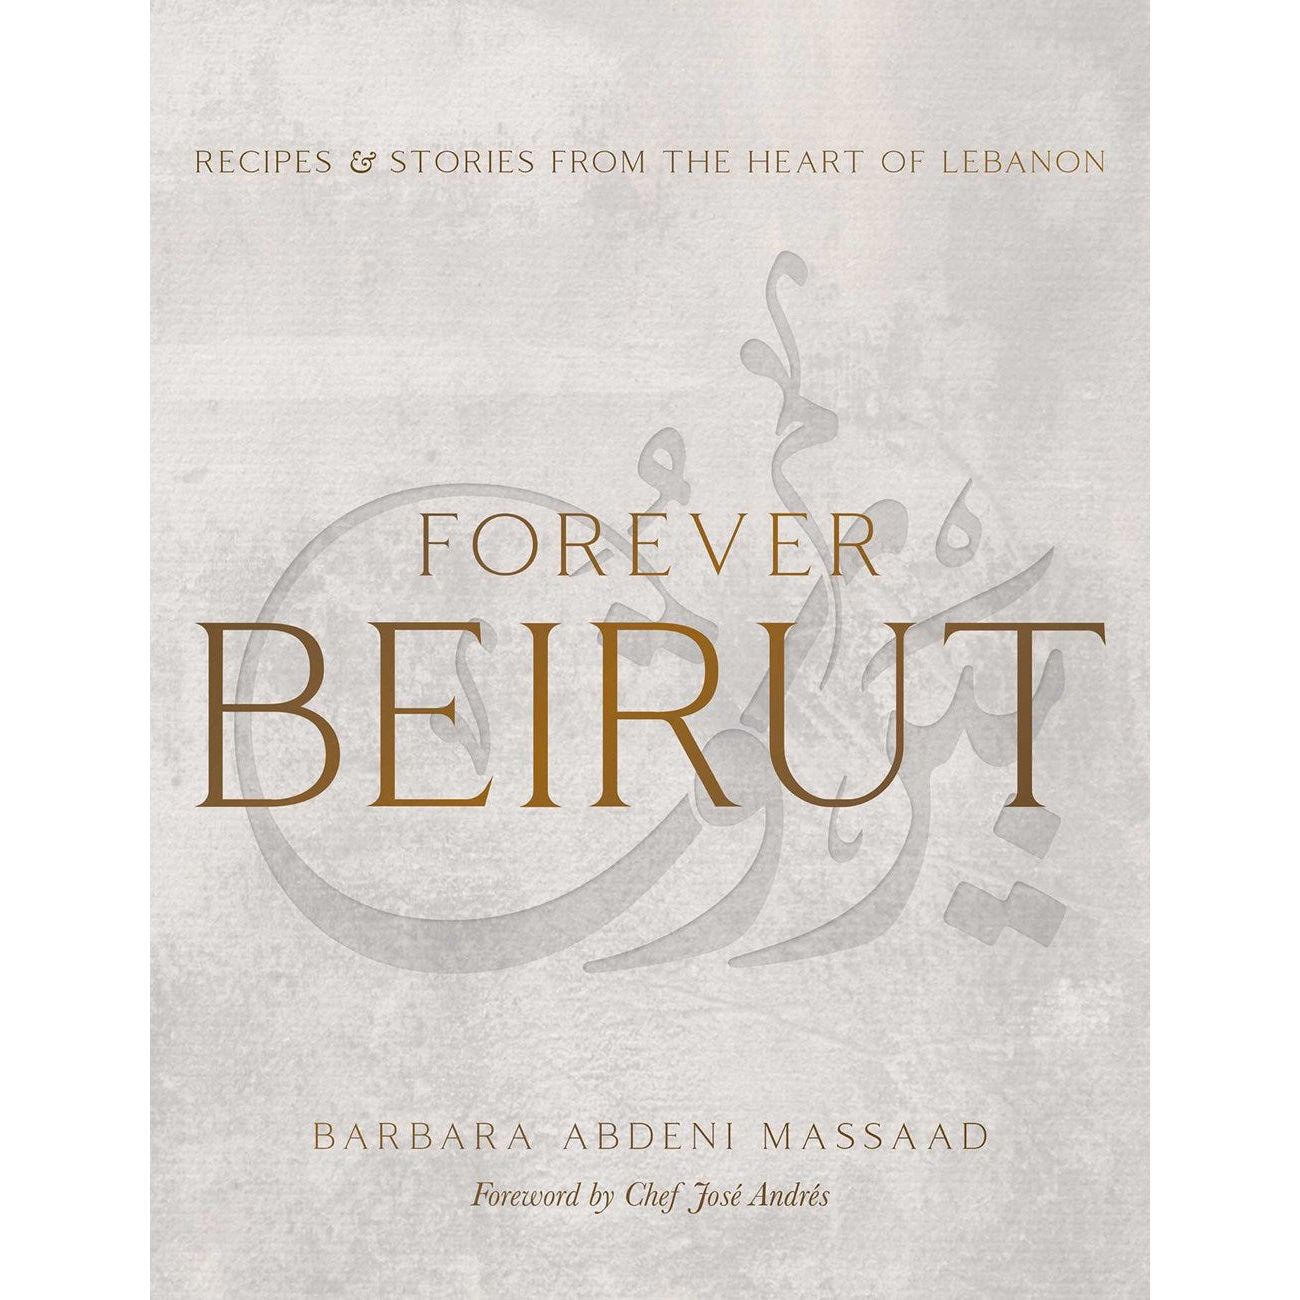 Forever Beirut (Barbara Abdeni Massaad)